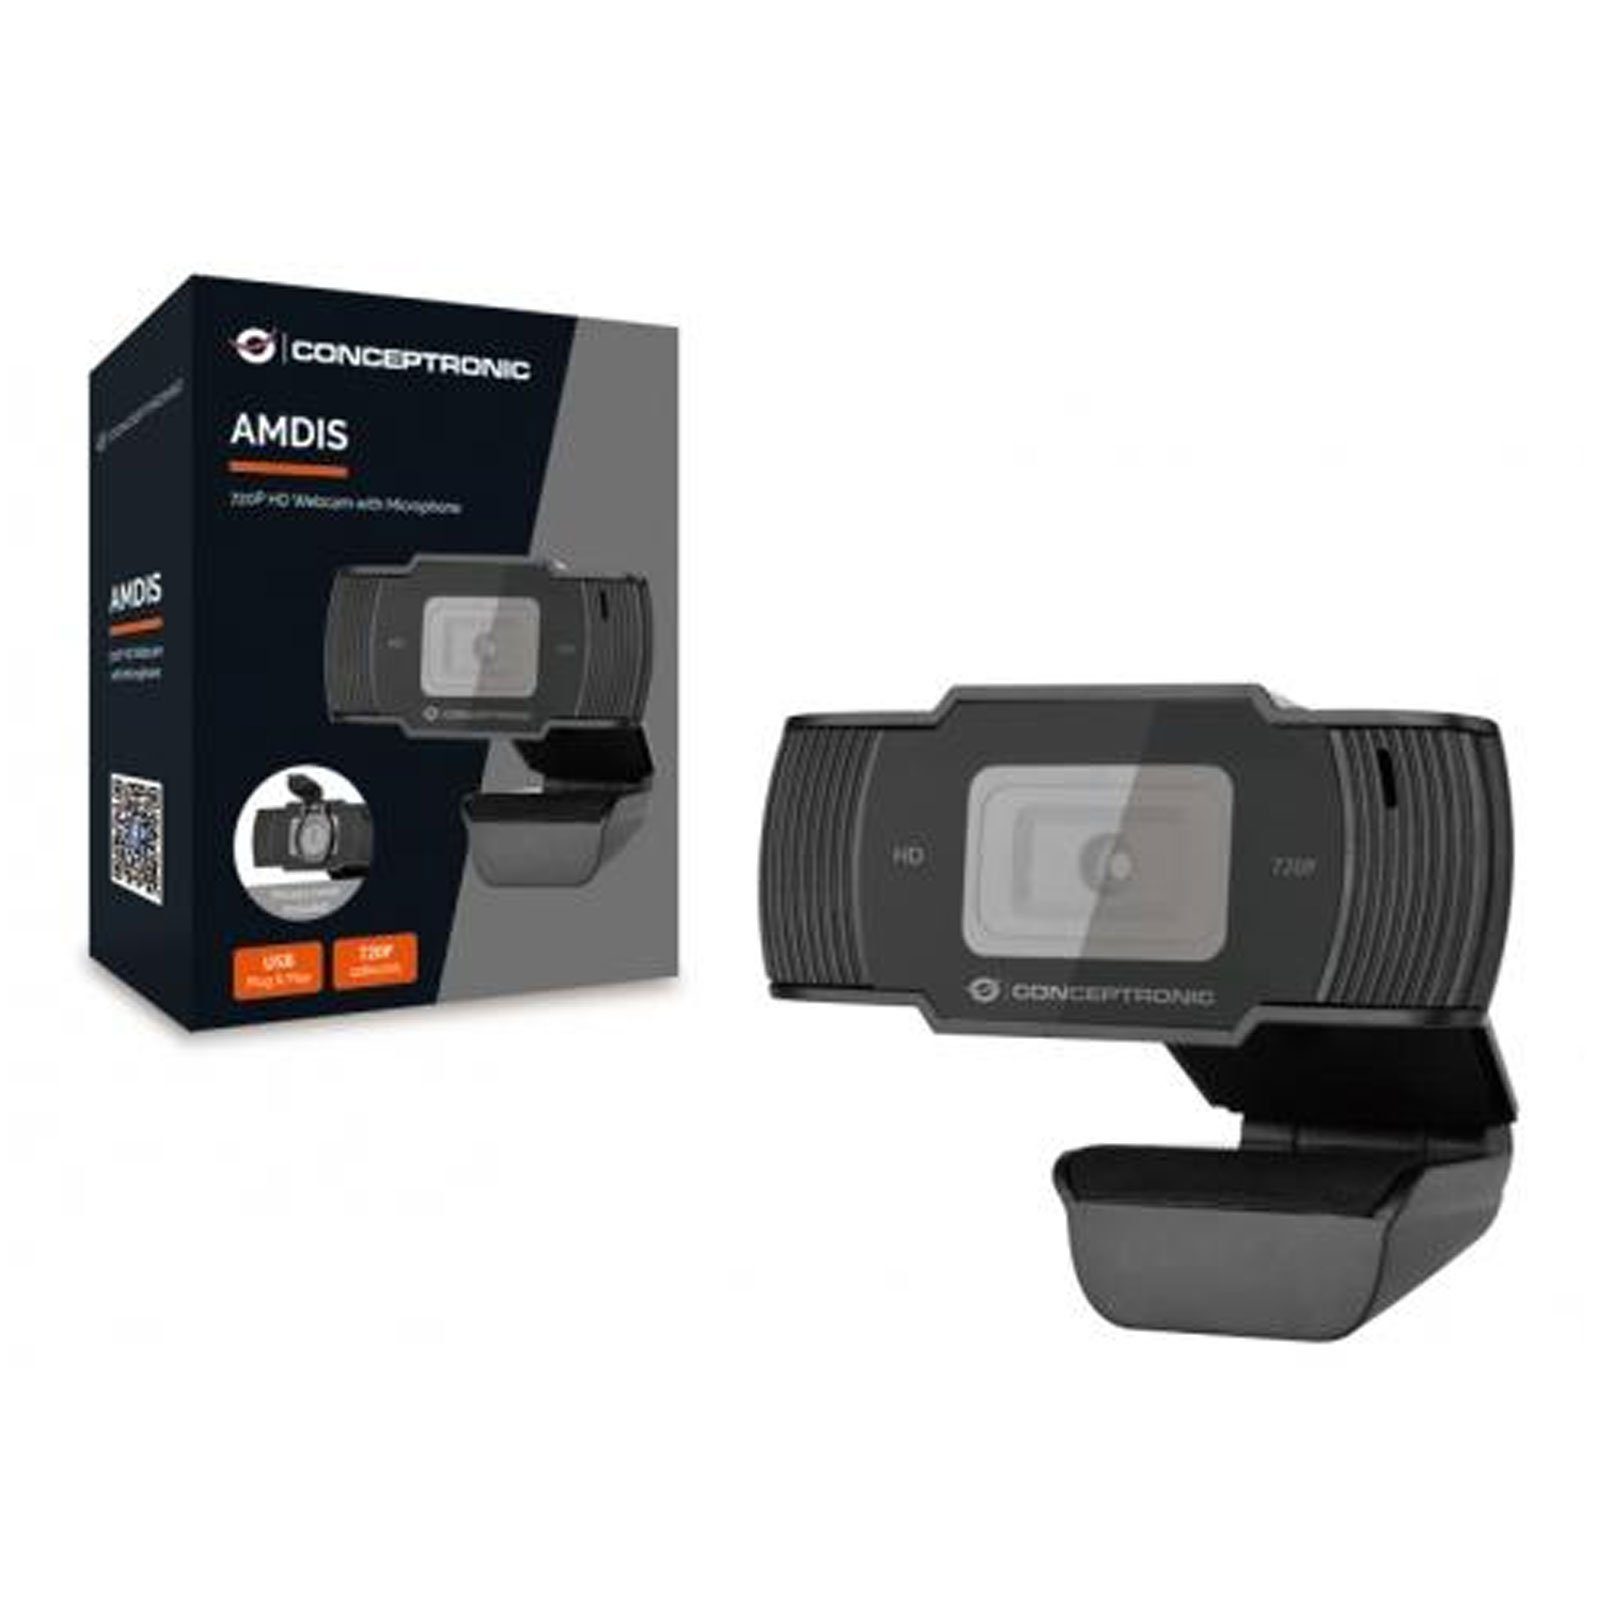 Conceptronic Amdis 720P HD Webcam + Microphone Webcam